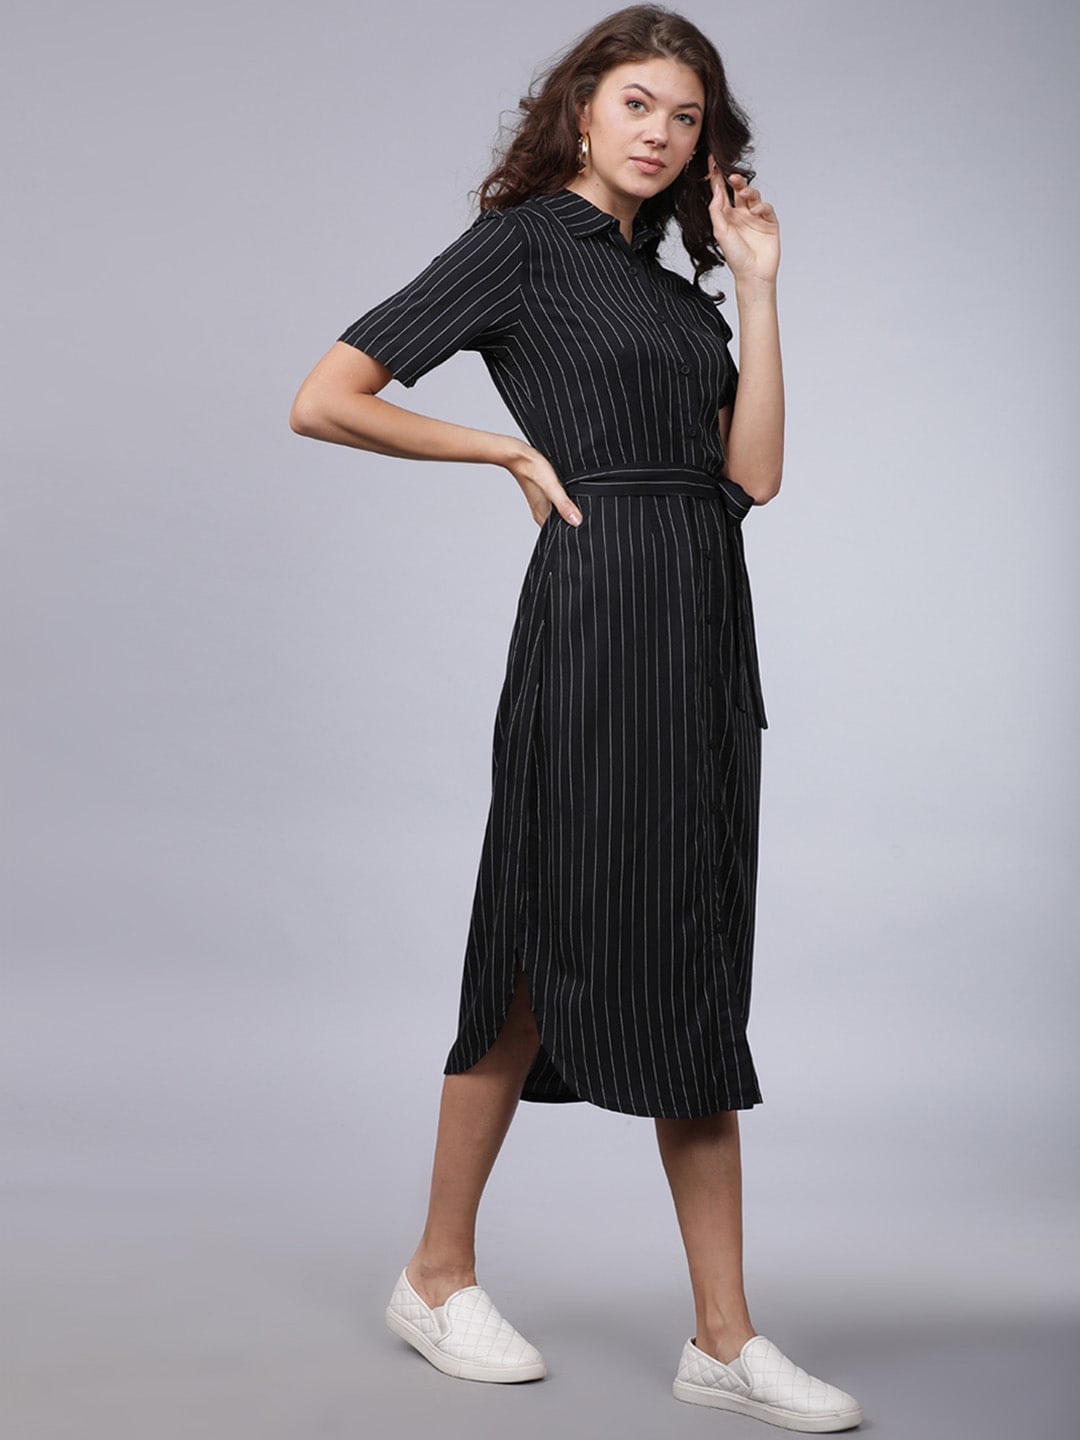 Tokyo Talkies Women Black Striped Shirt Dress Price in India